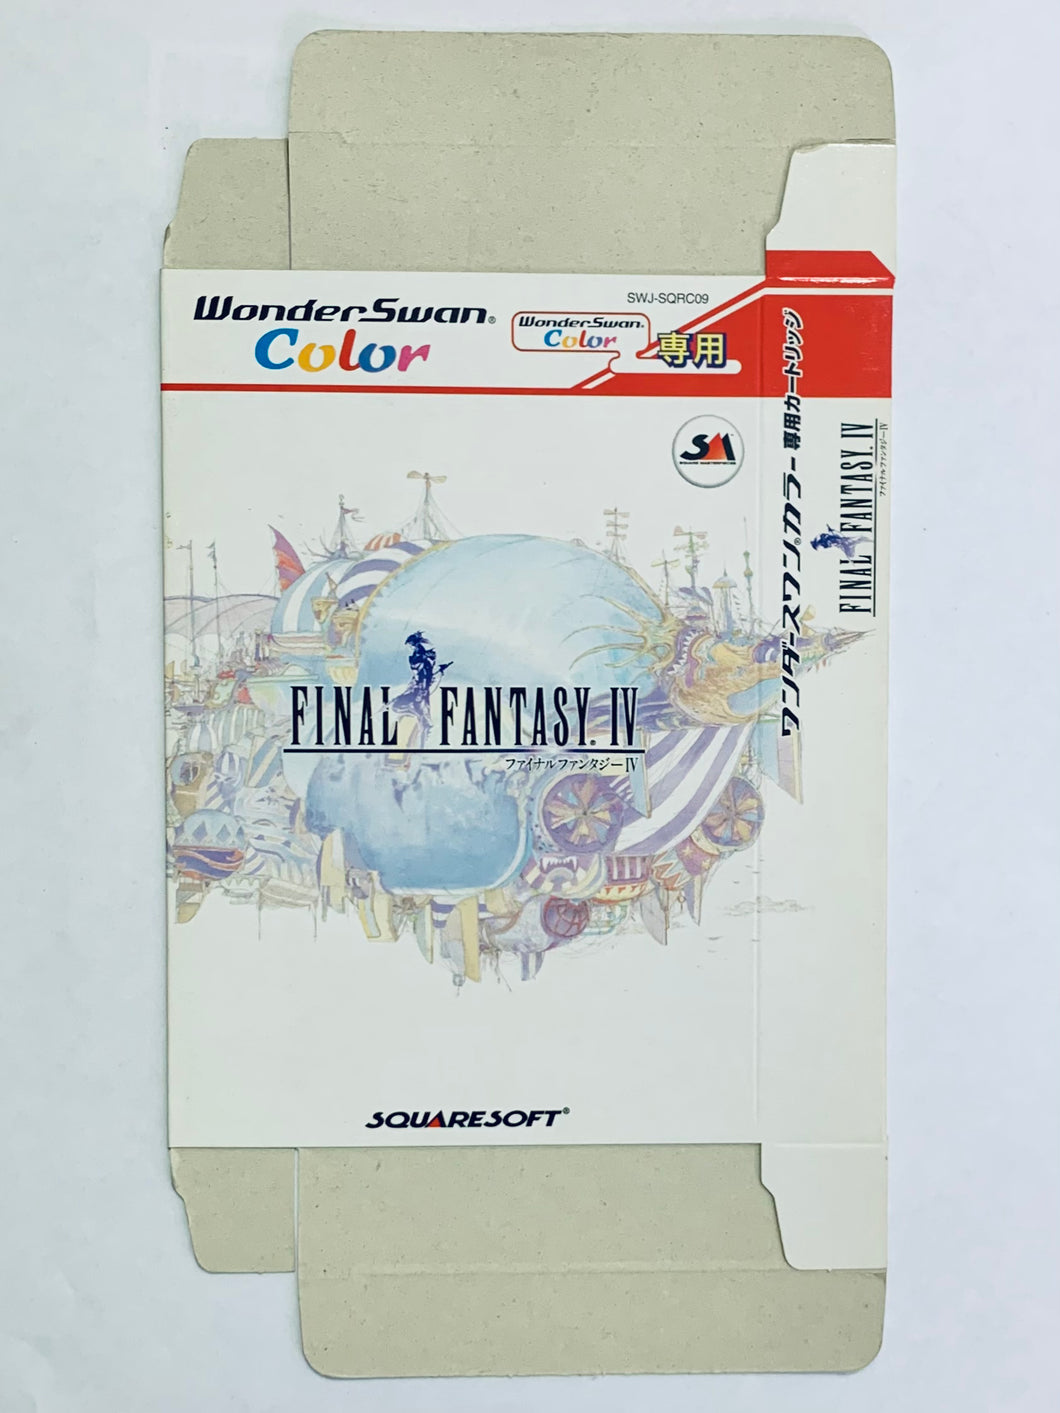 Final Fantasy IV - WonderSwan Color - WSC - JP - Box Only (SWJ-SQRC09)